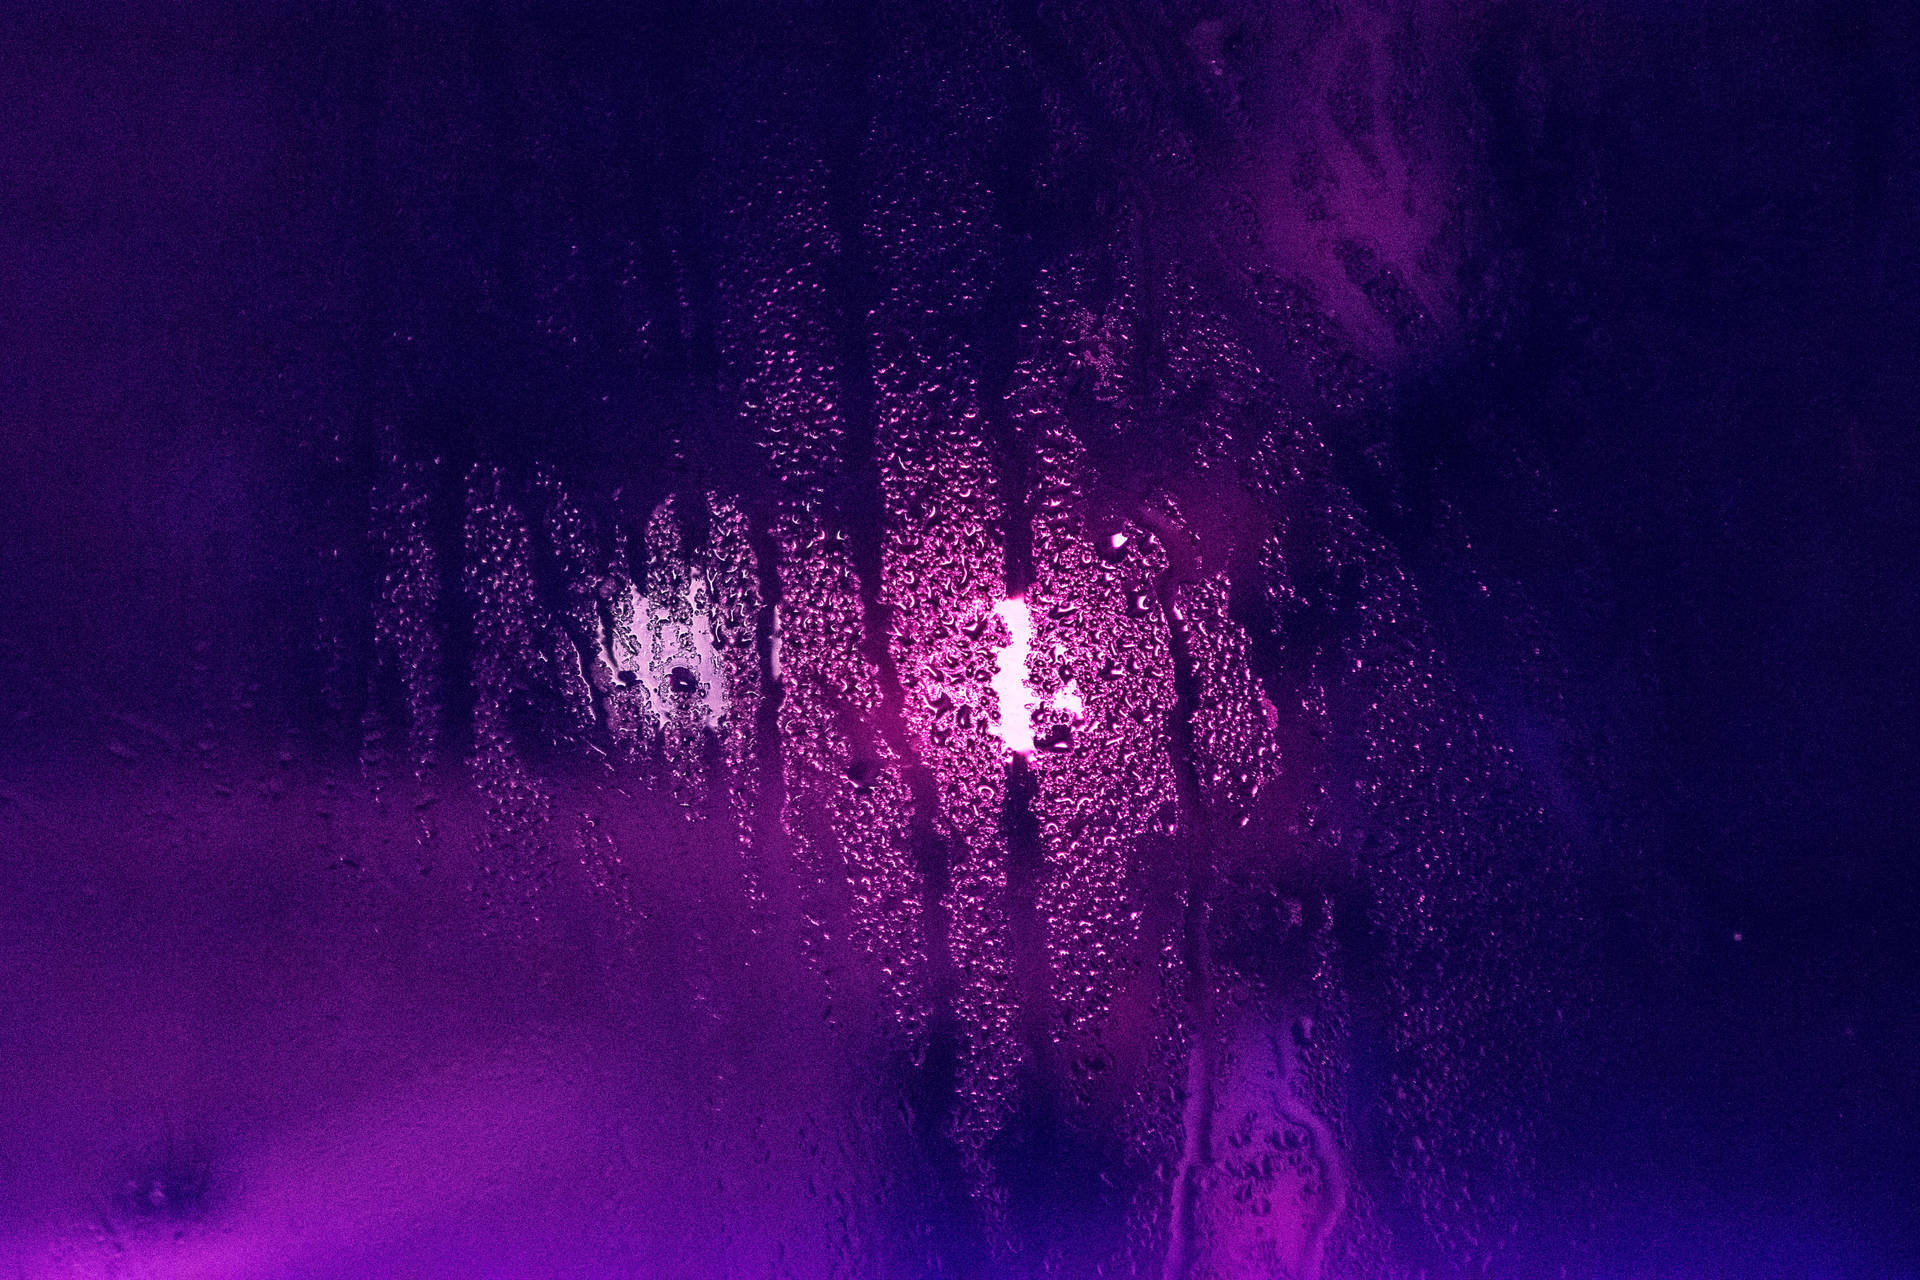 Wallpaper ID 5536  fractal 3d dark purple 4k free download